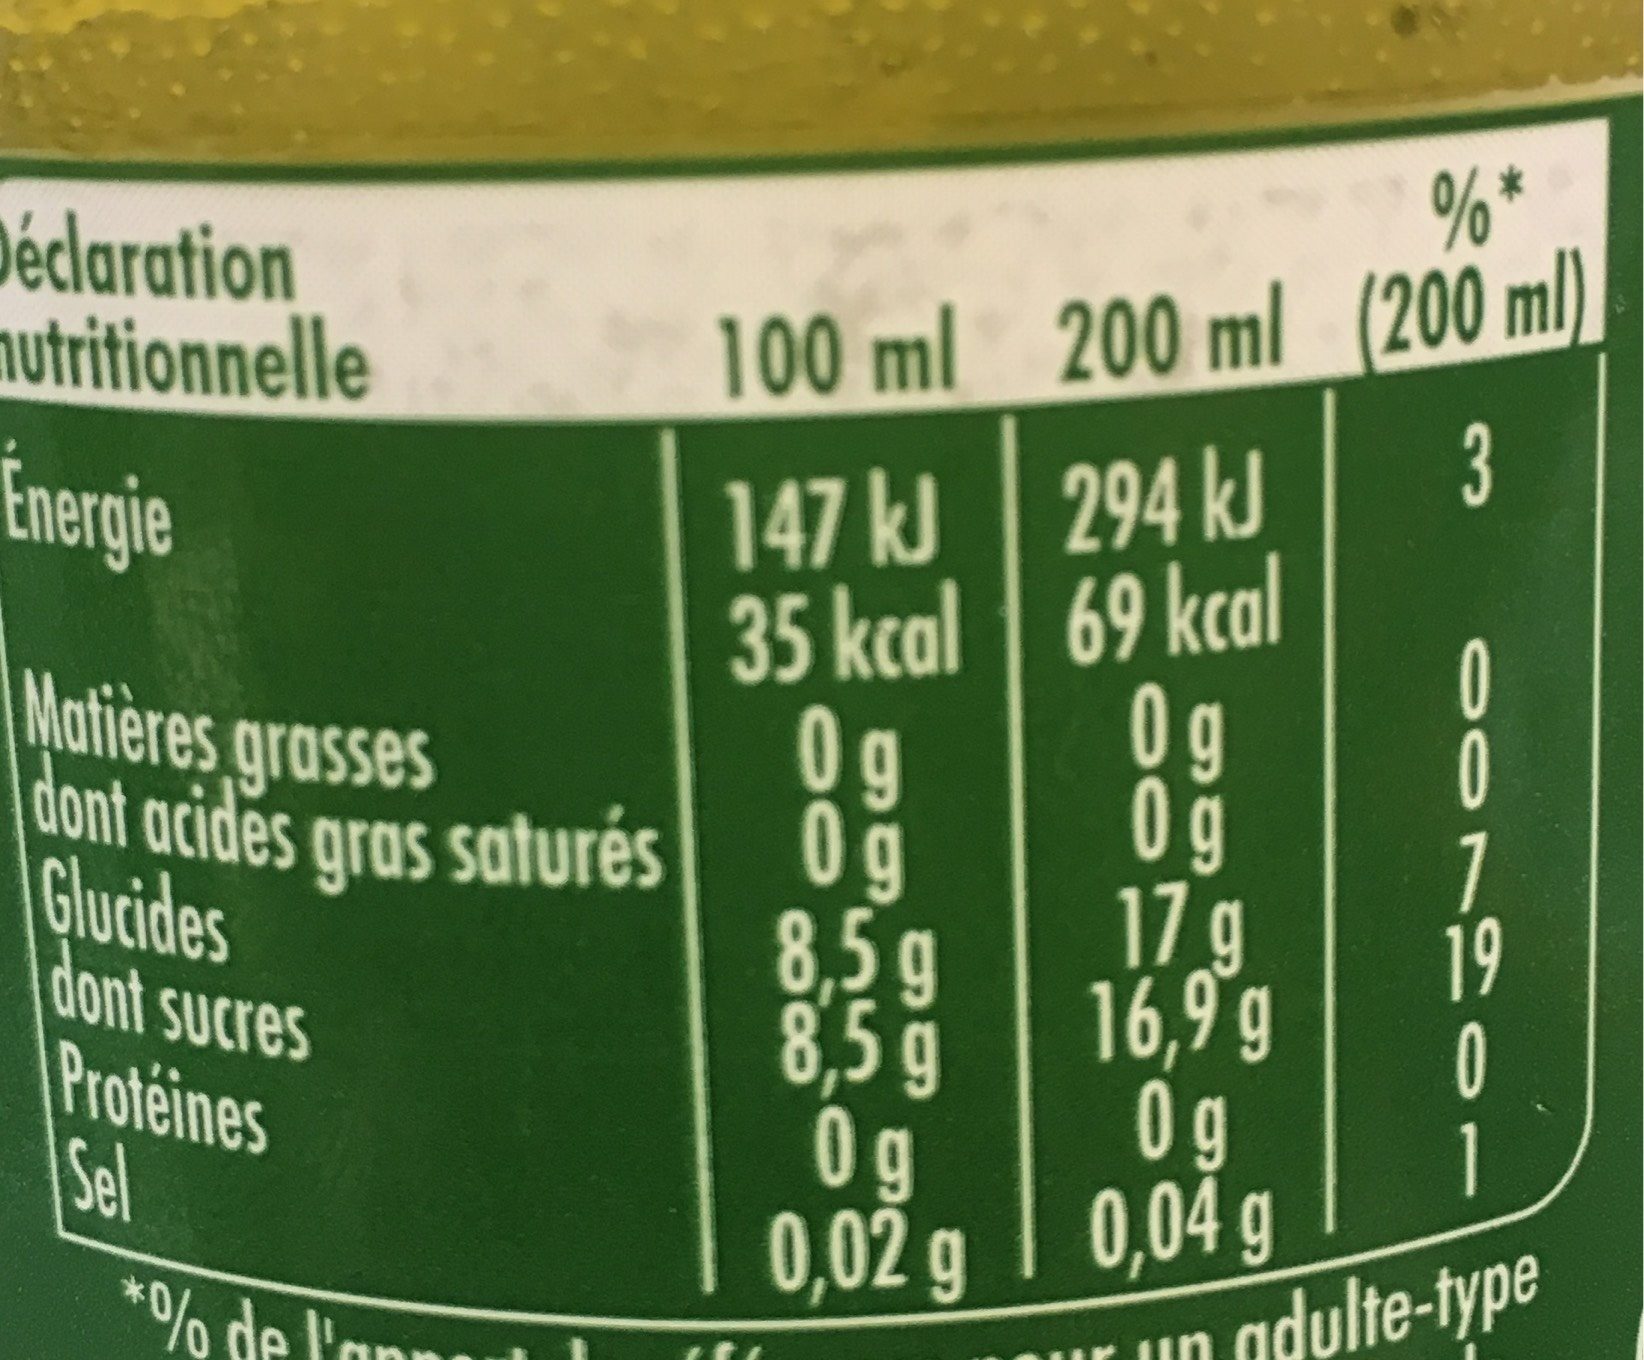 ginger ale - Nutrition facts - fr